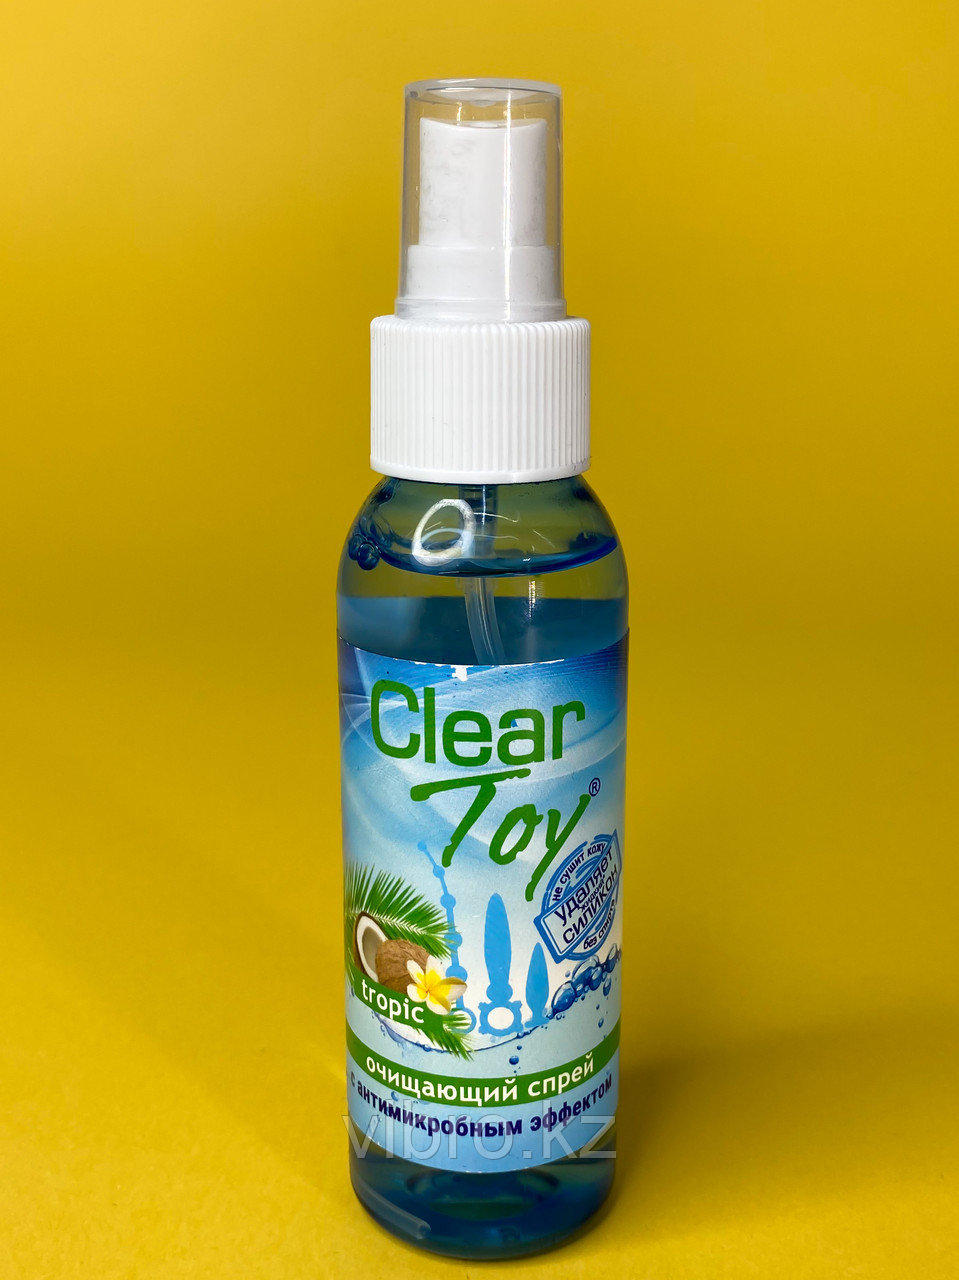 Очищающий спрей "Clear toy" с ароматом тропик, 100мл